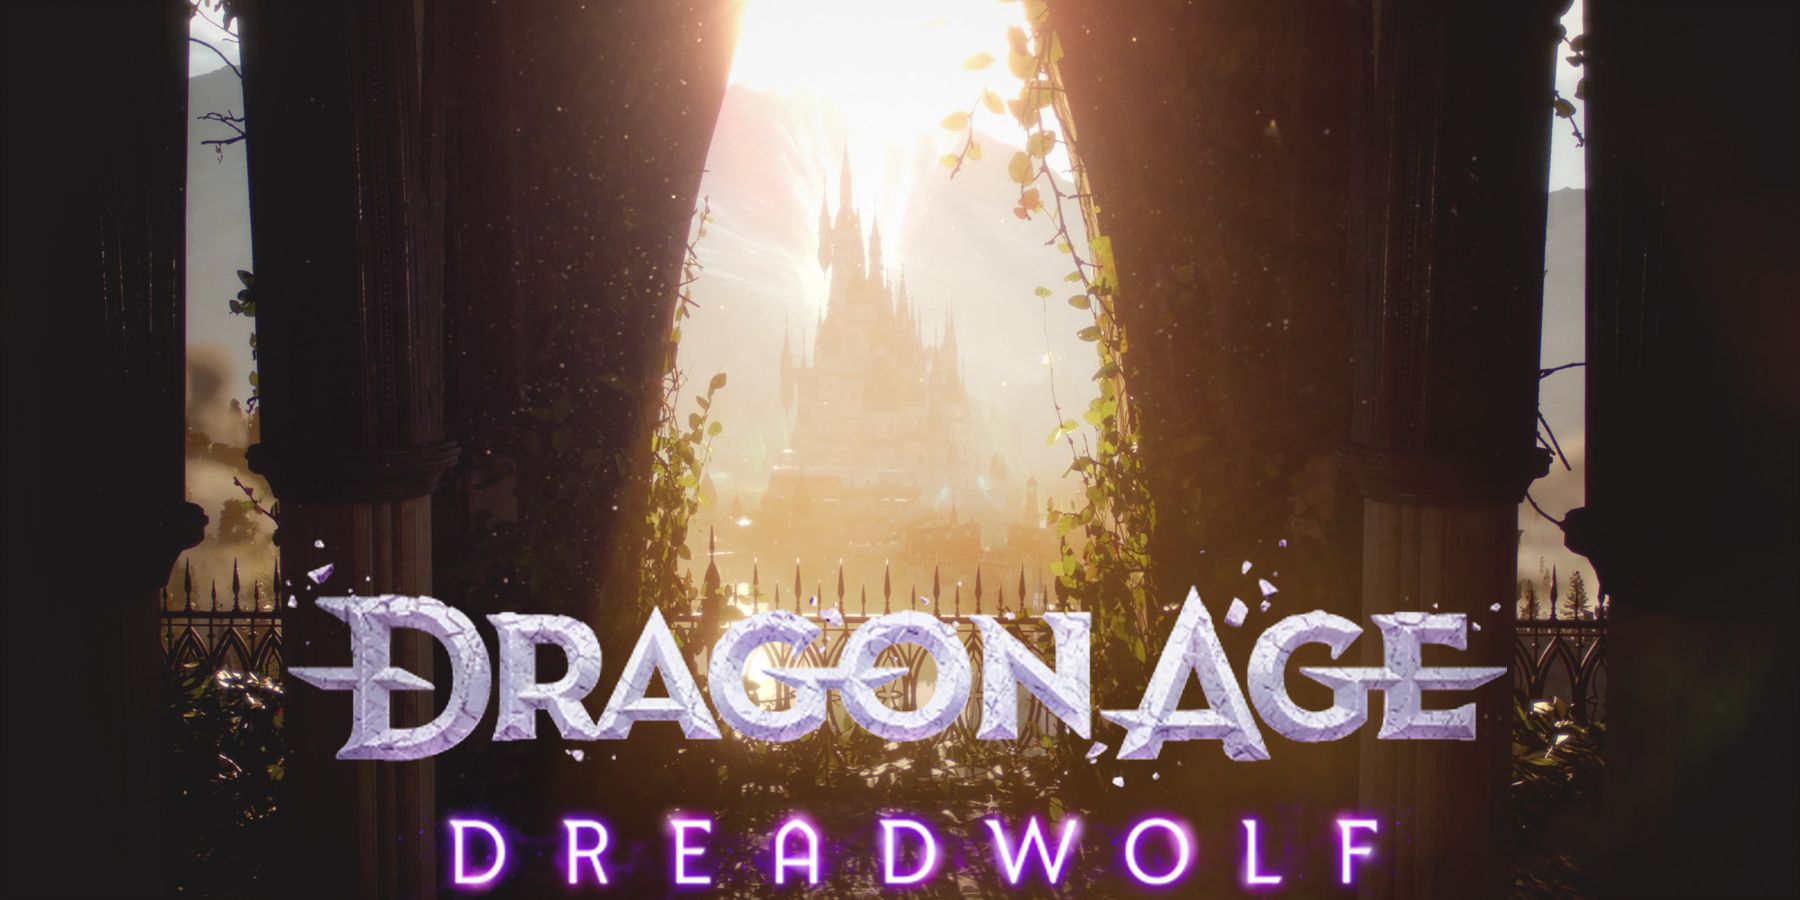 Dragon Age Dreadwolf TGA 2020 Teaser castle still with game logo